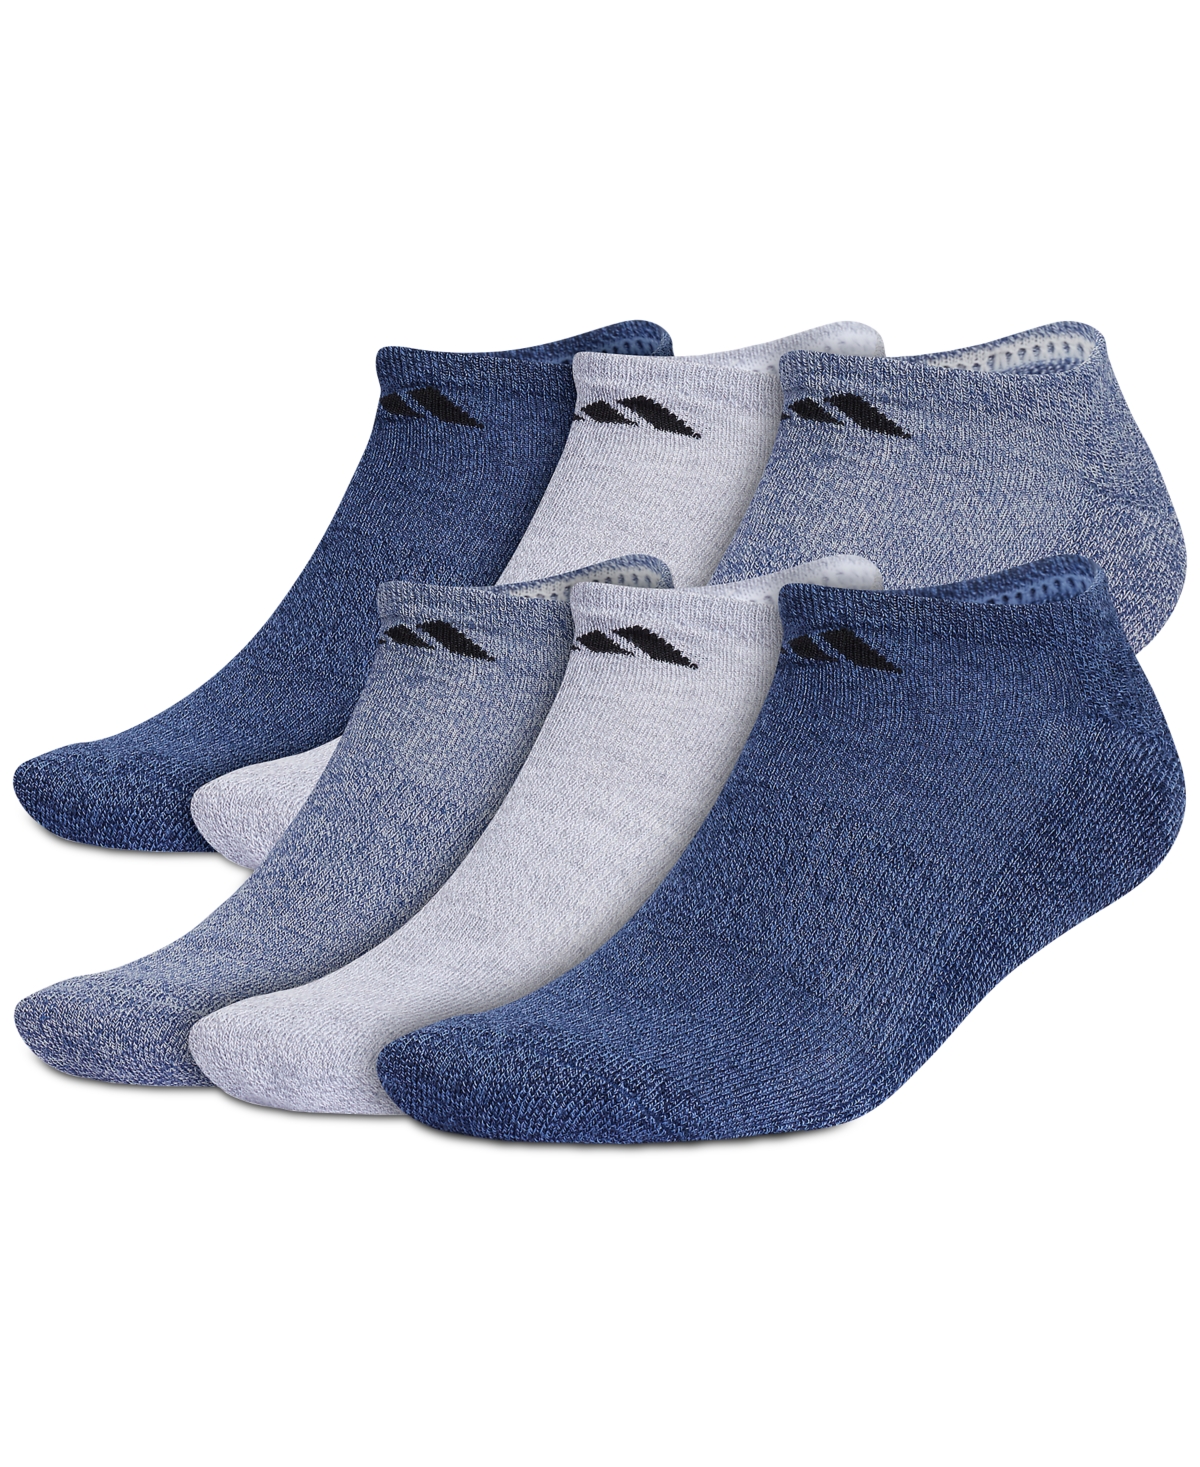 Men's Athletic Cushioned No-Show Socks - 6 pk. - Navy